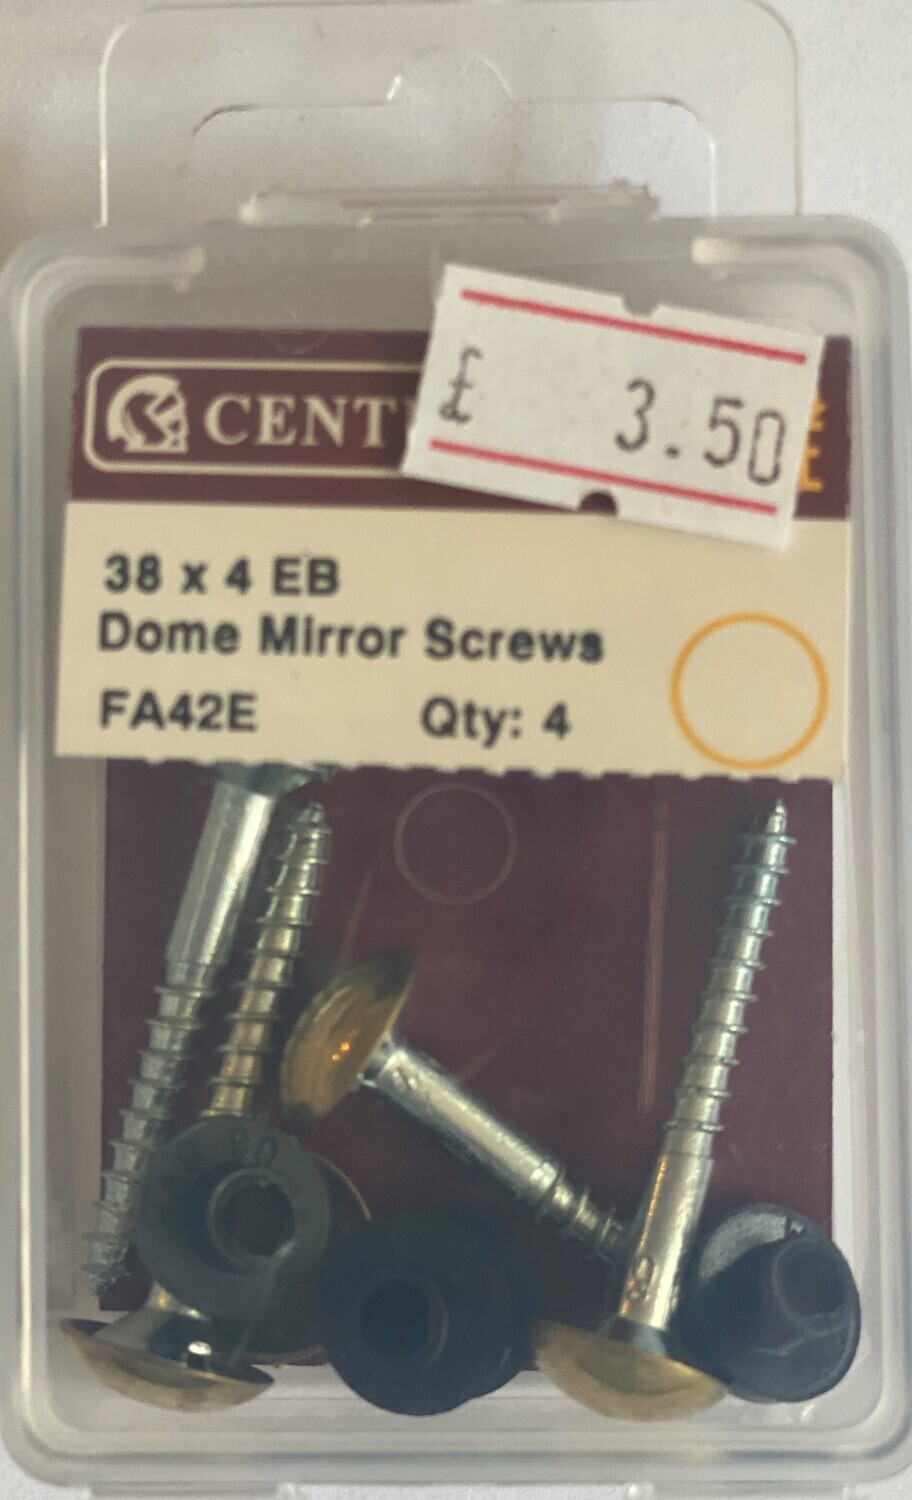 Dome Mirror Screws, 38mm x 4mm